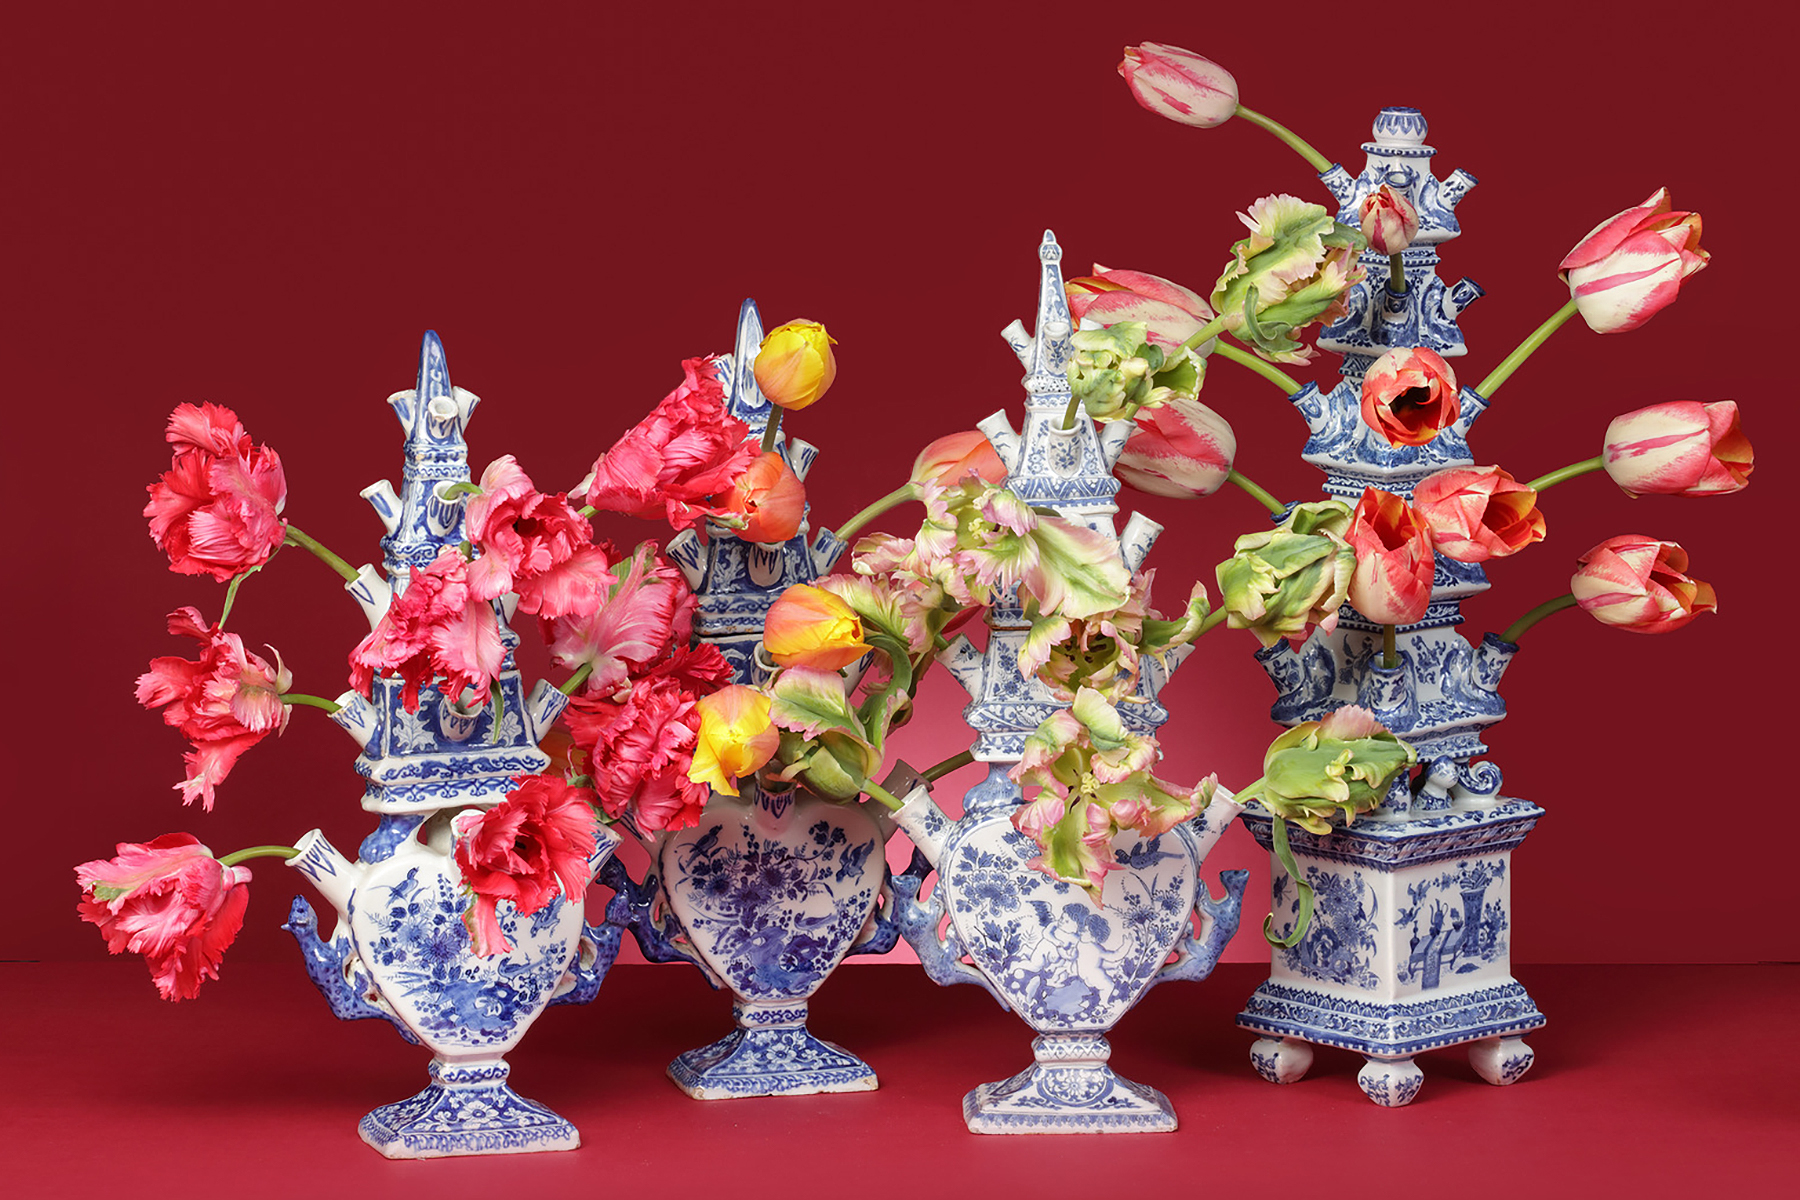 Delftware Flower Vases, circa 1700